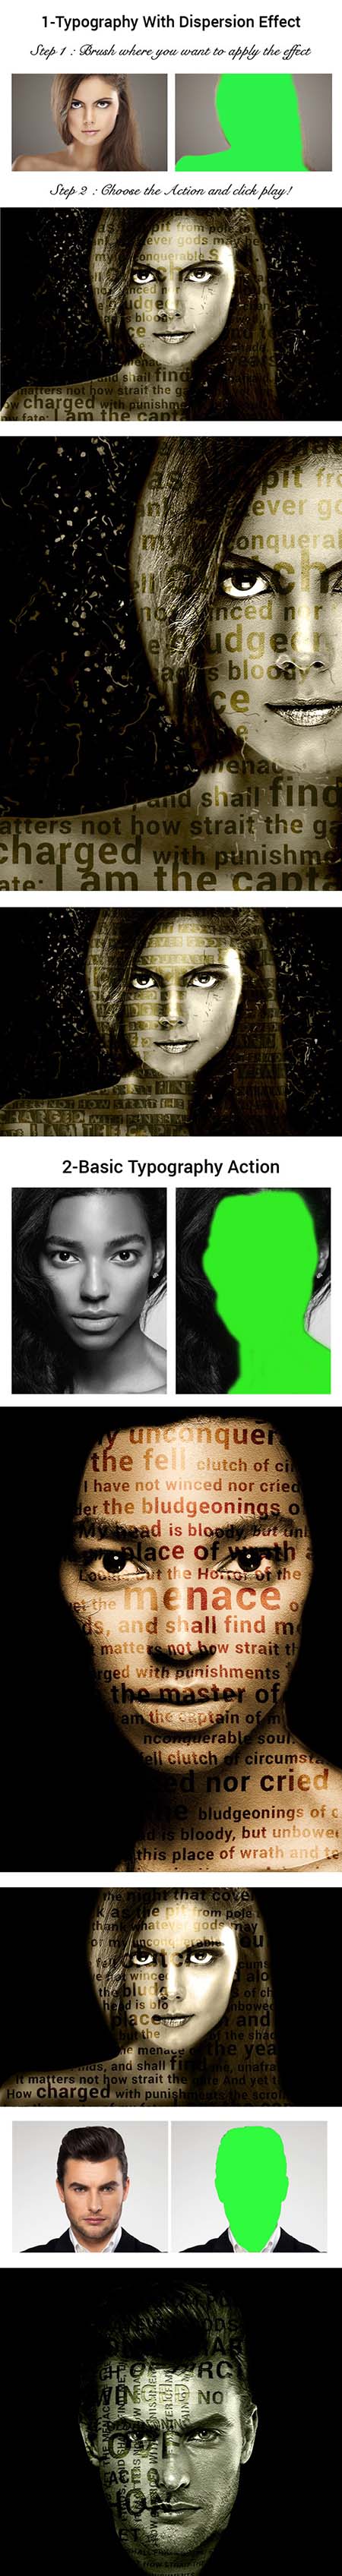 GraphicRiver - Typography Art Photoshop Action 11094257